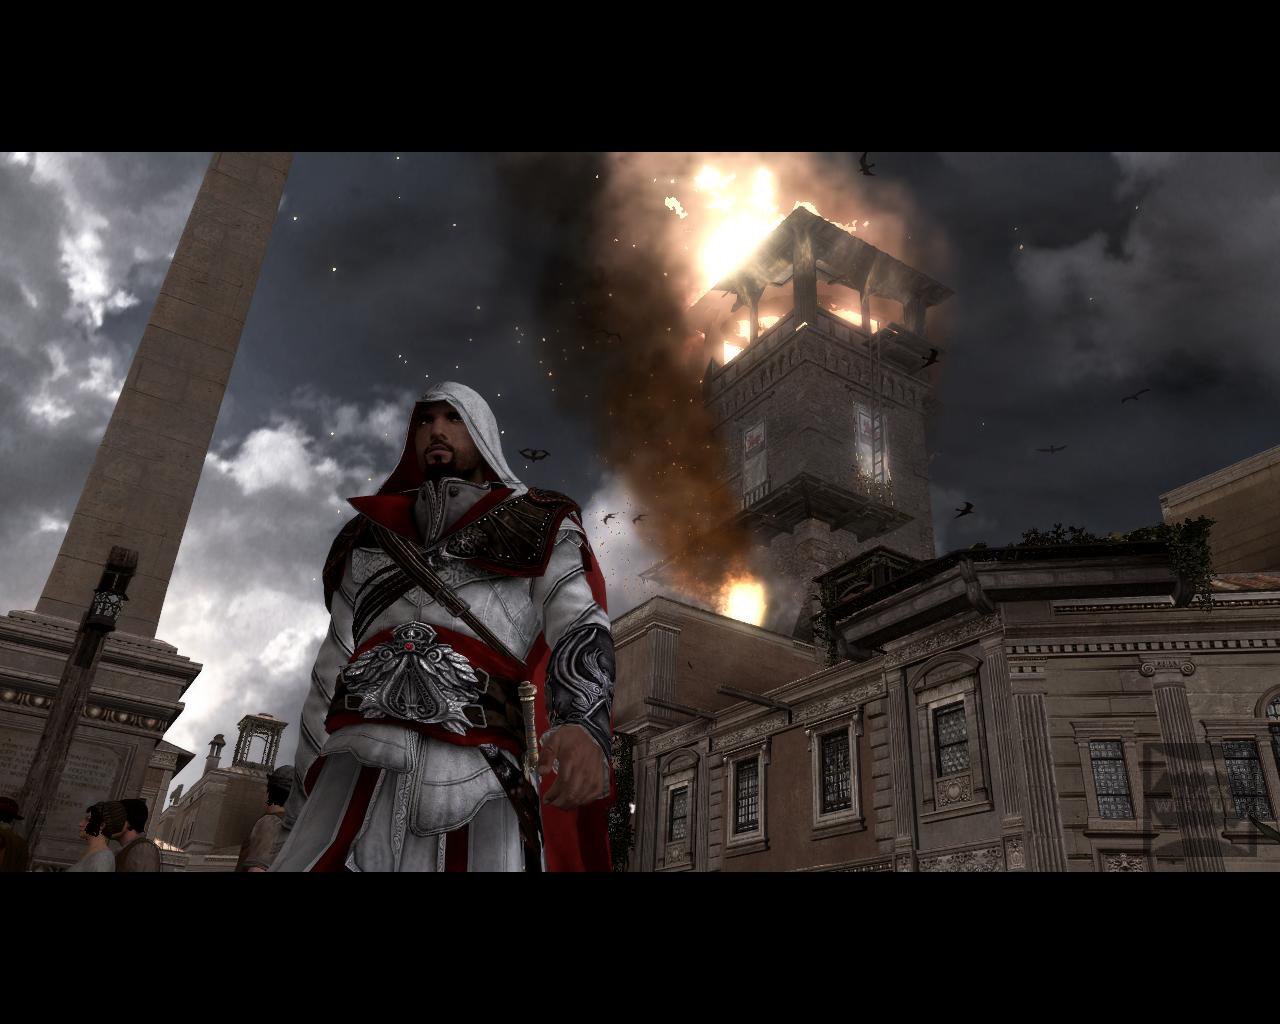 Brotherhood ii. Assassin's Creed Brotherhood Gameplay. Assassin's Creed 2 геймплей. Assassin's Creed Brotherhood геймплей. Ассасин Крид бразерхуд геймплей.